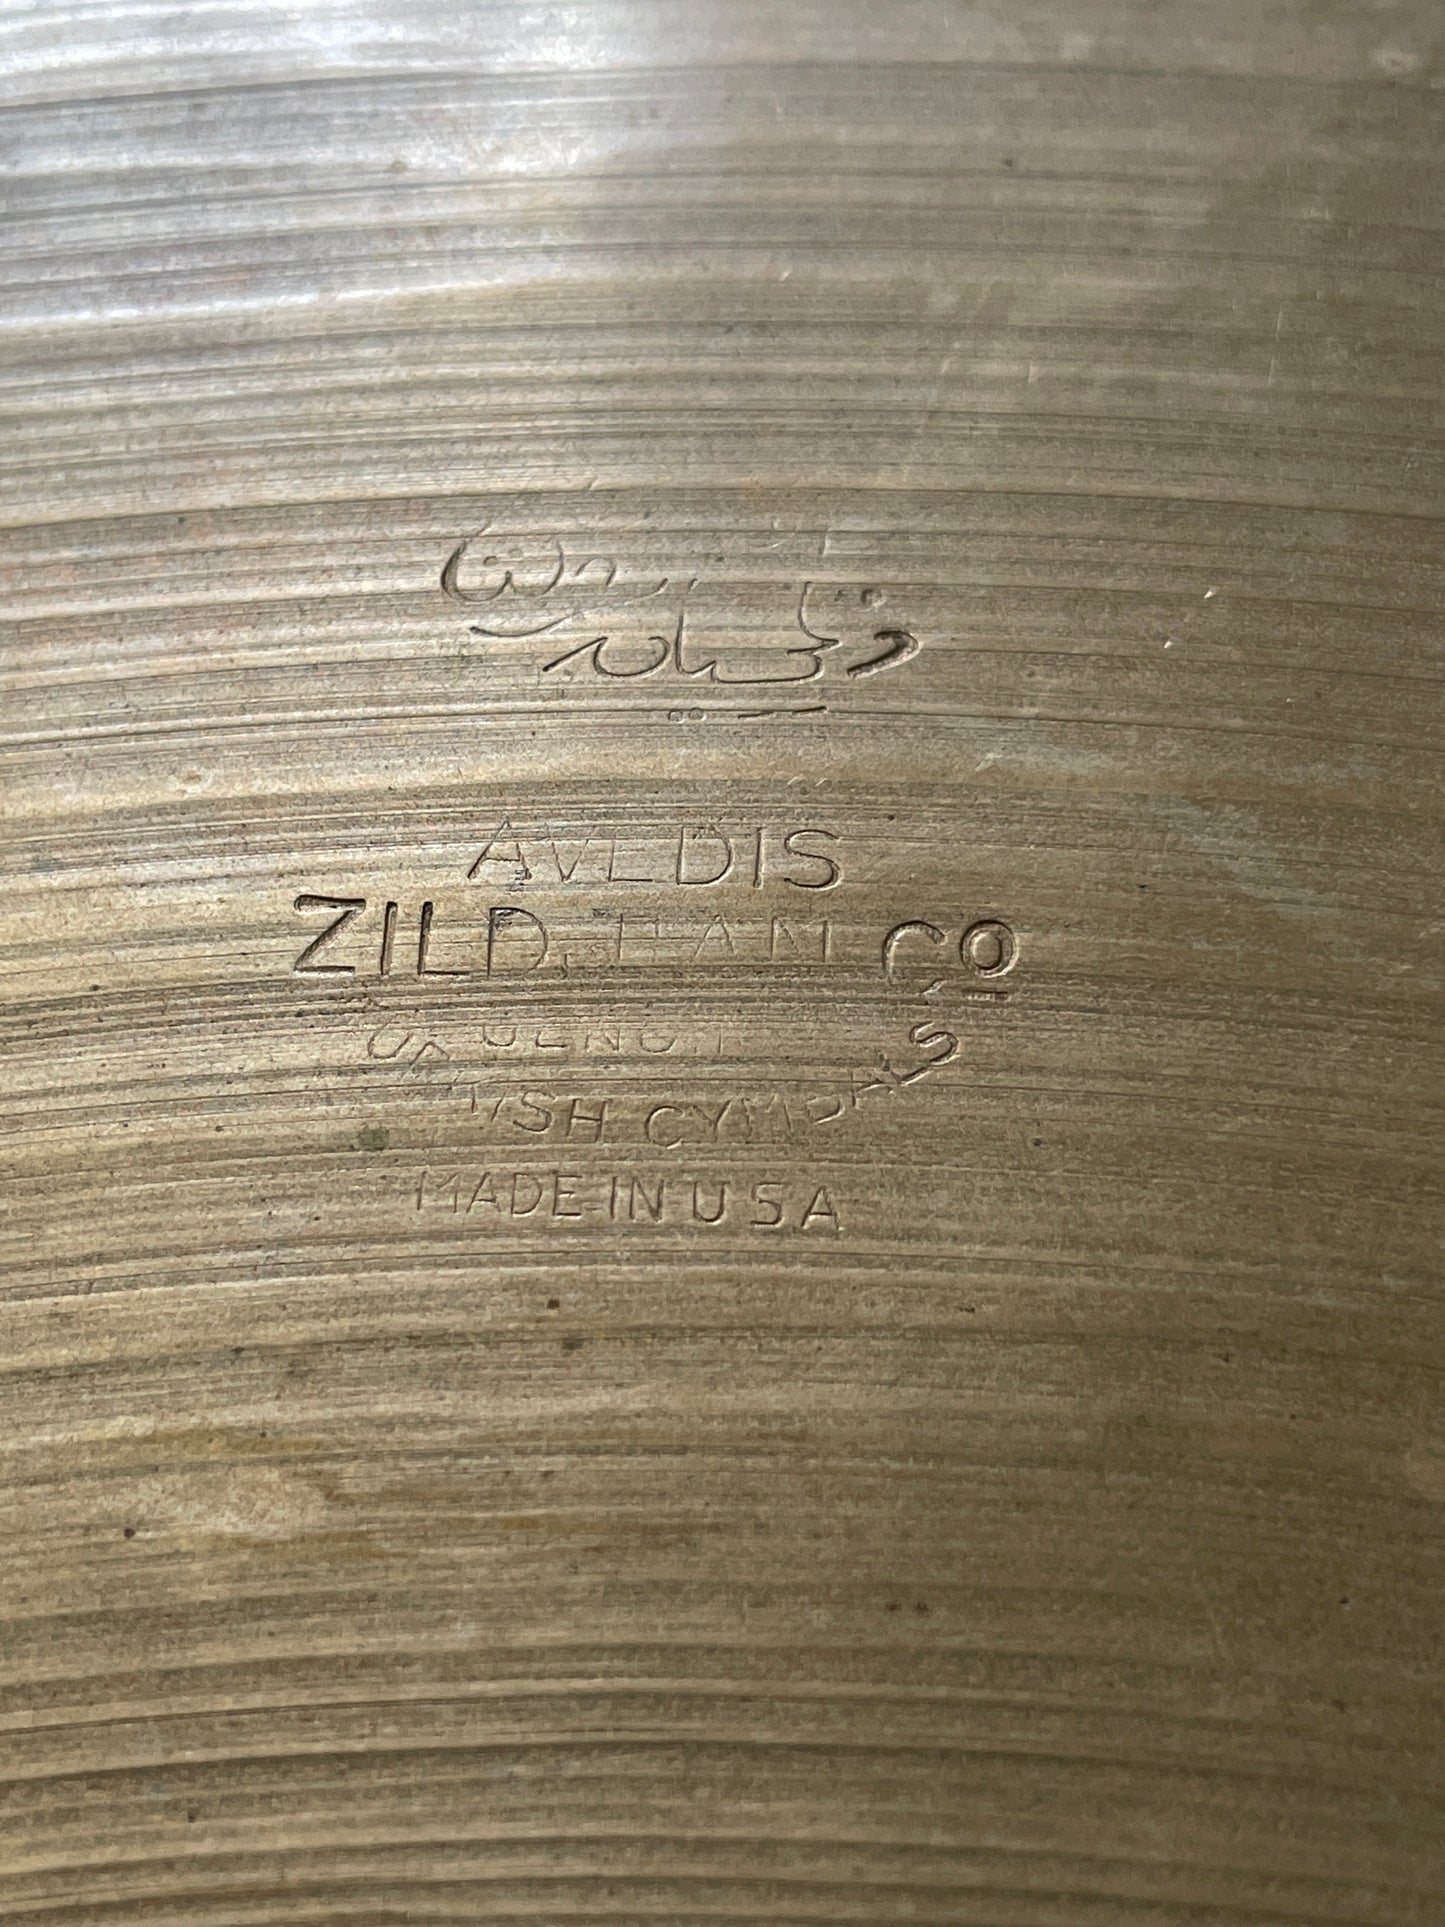 22" Zildjian A 1947-49 Trans Stamp I Ride Cymbal 2342g #790 *Video Demo*